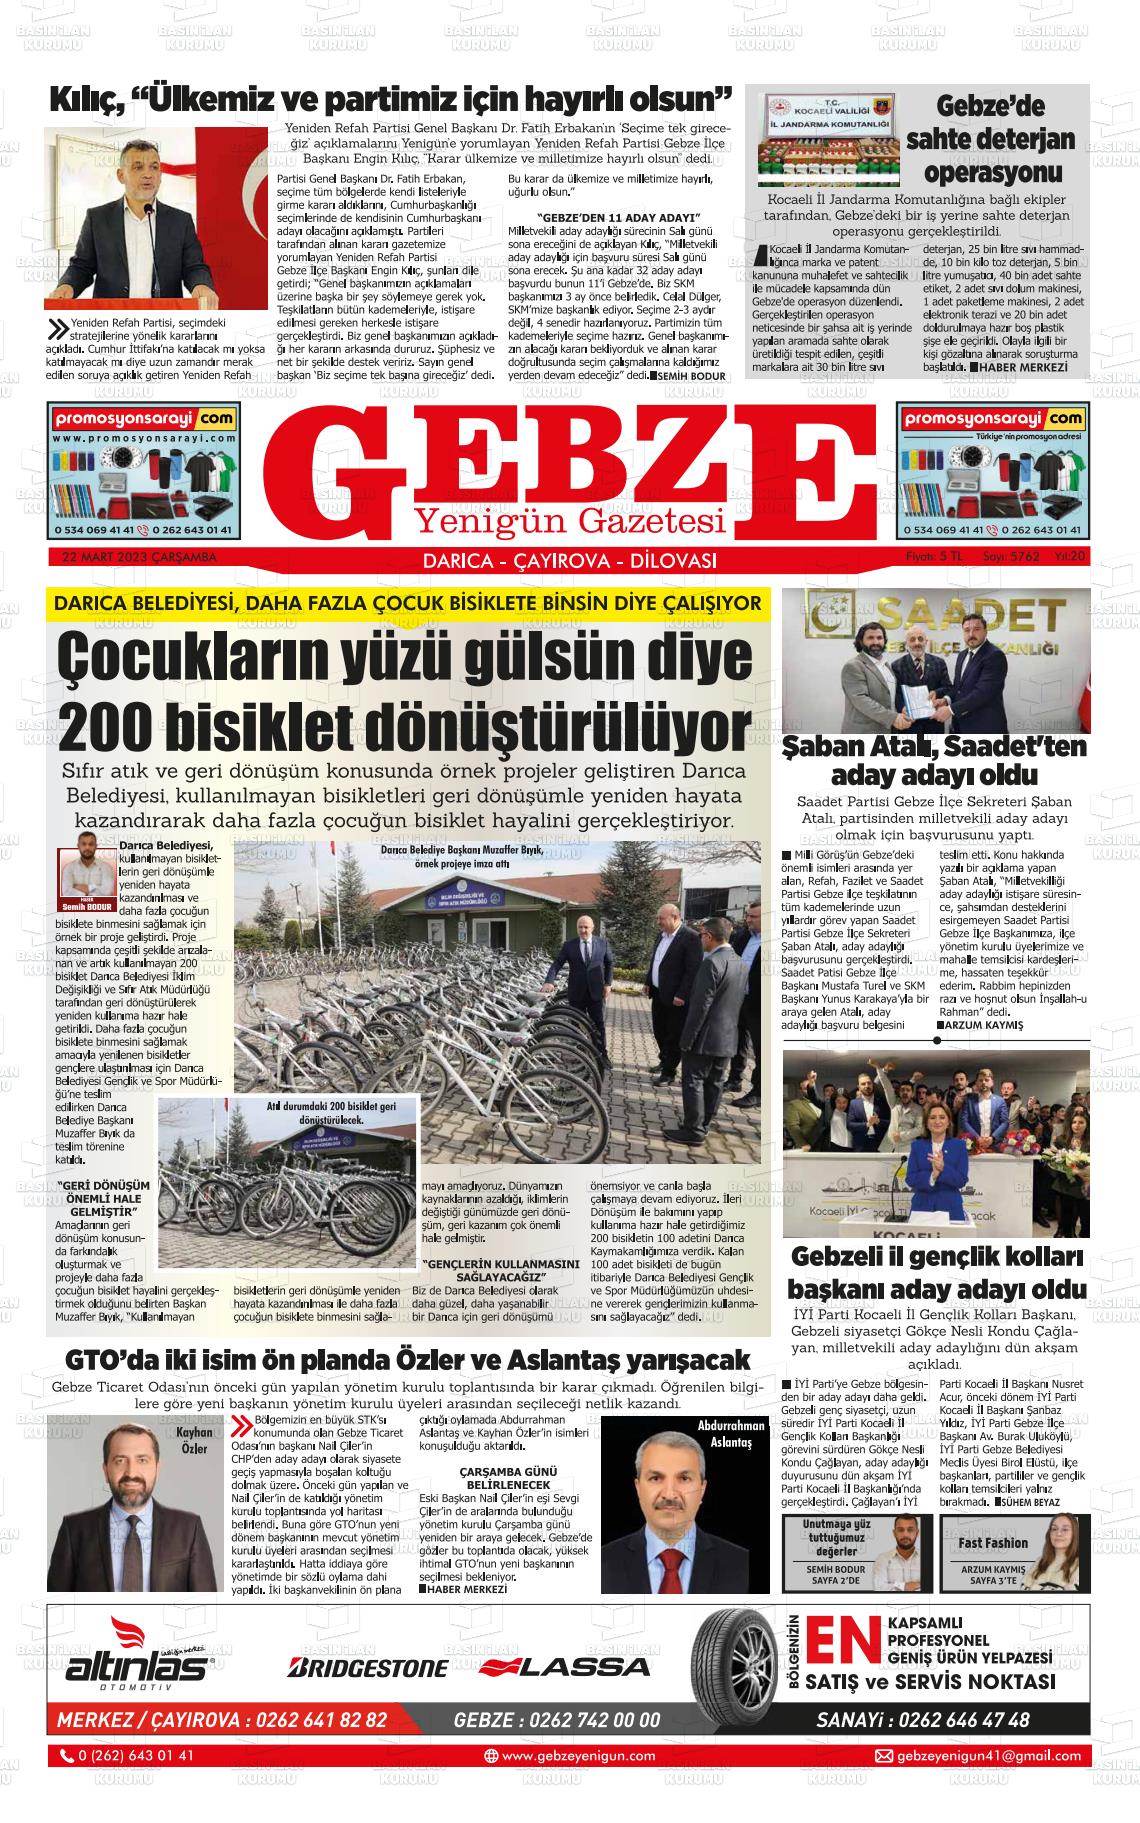 22 Mart 2023 Gebze Yenigün Gazete Manşeti